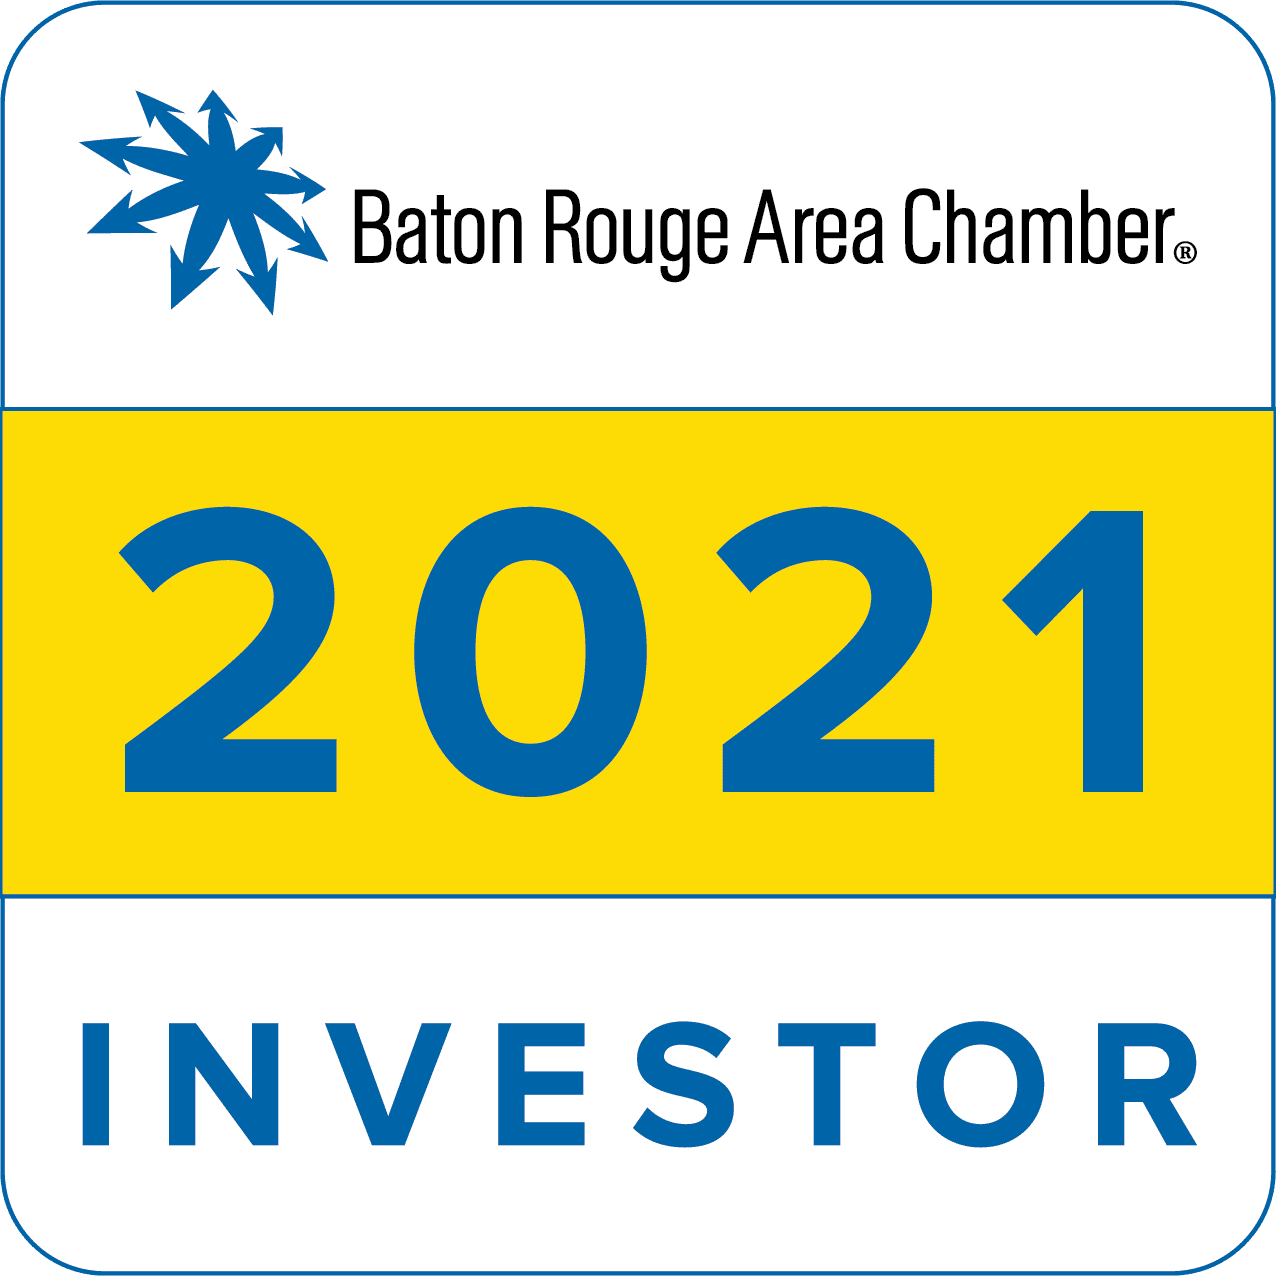 Baton Rouge Area Chamber Investor